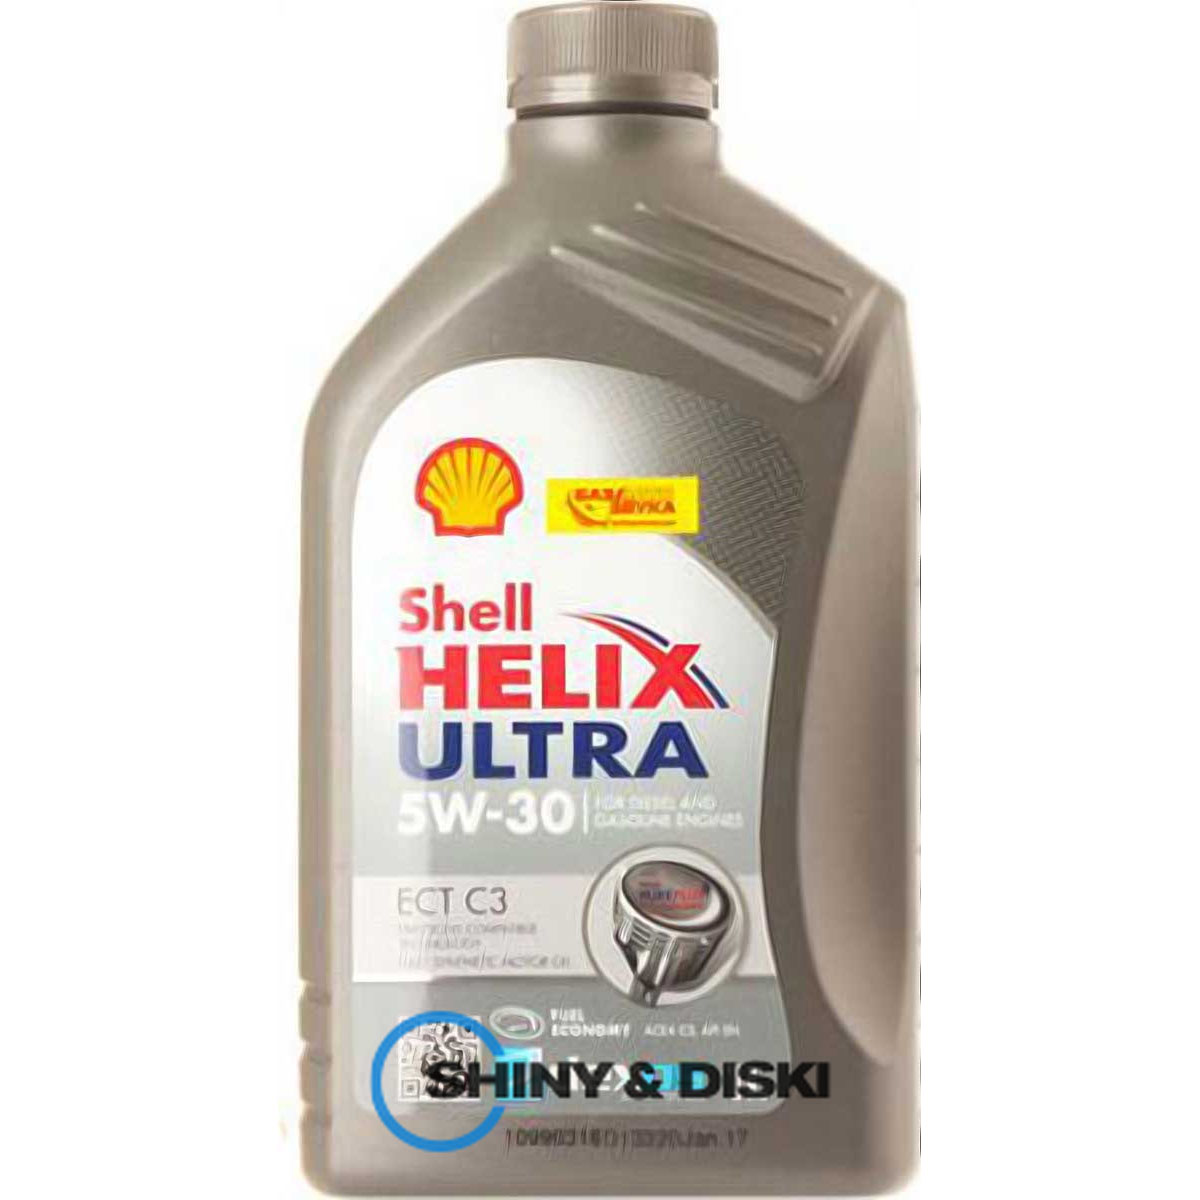 shell helix ultra ect c3